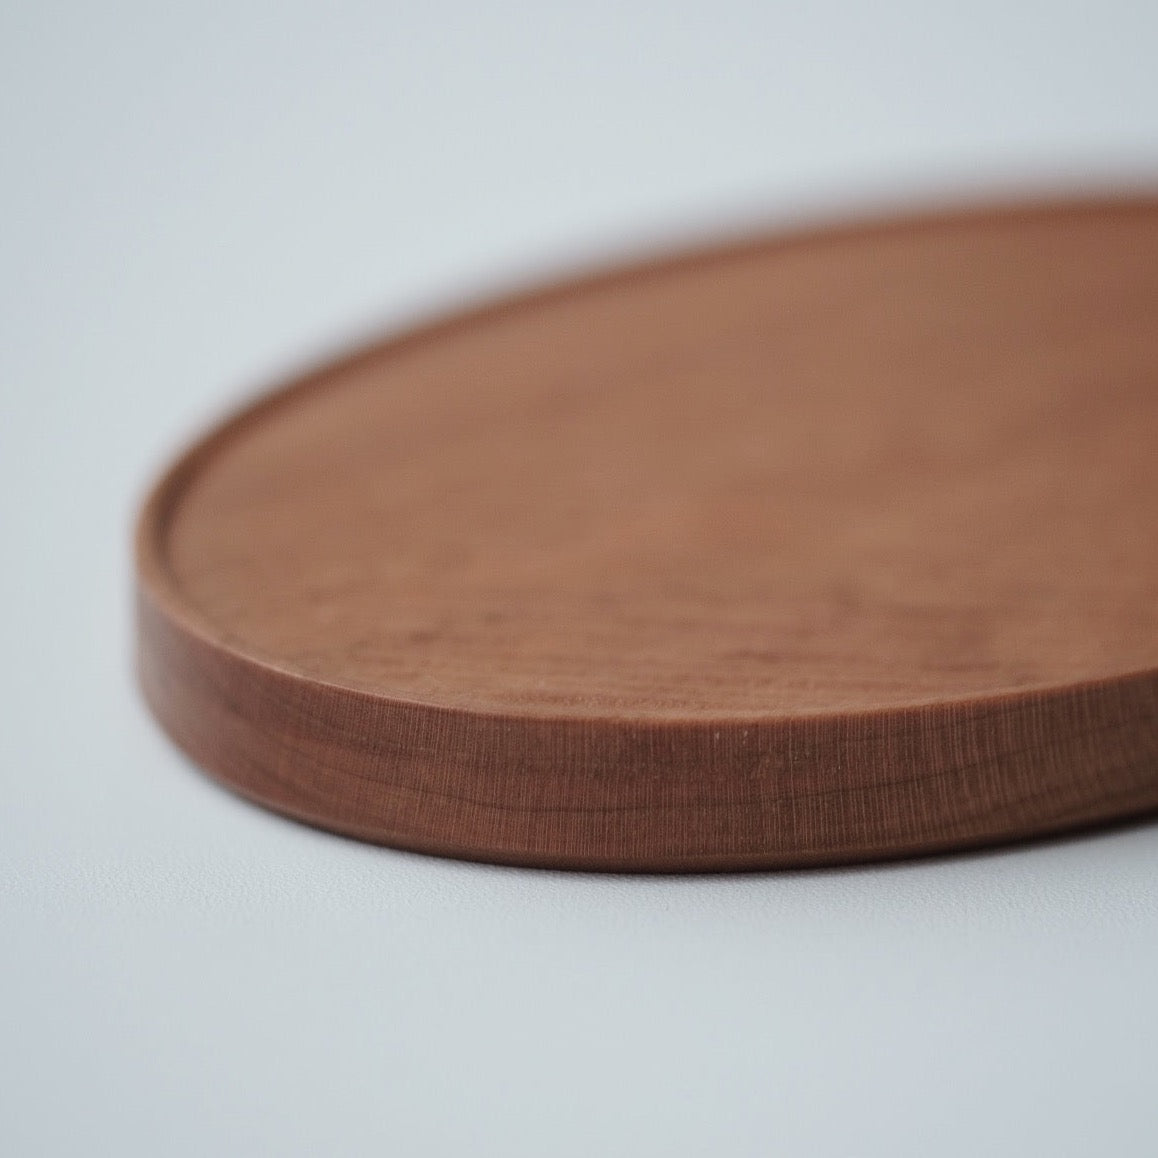 Cherry Wood Dessert Plate - Oval